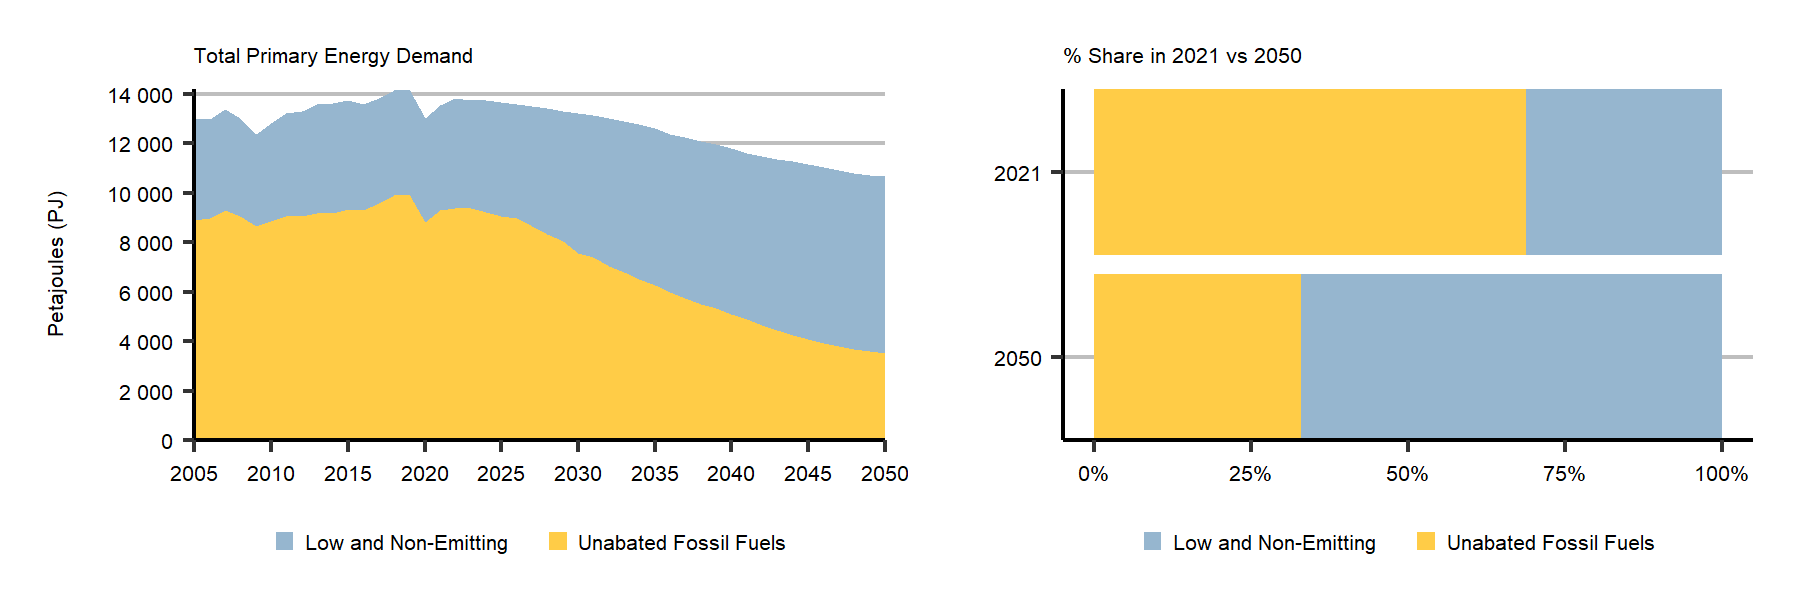 Primary Energy Demand in the Evolving Policies Scenario